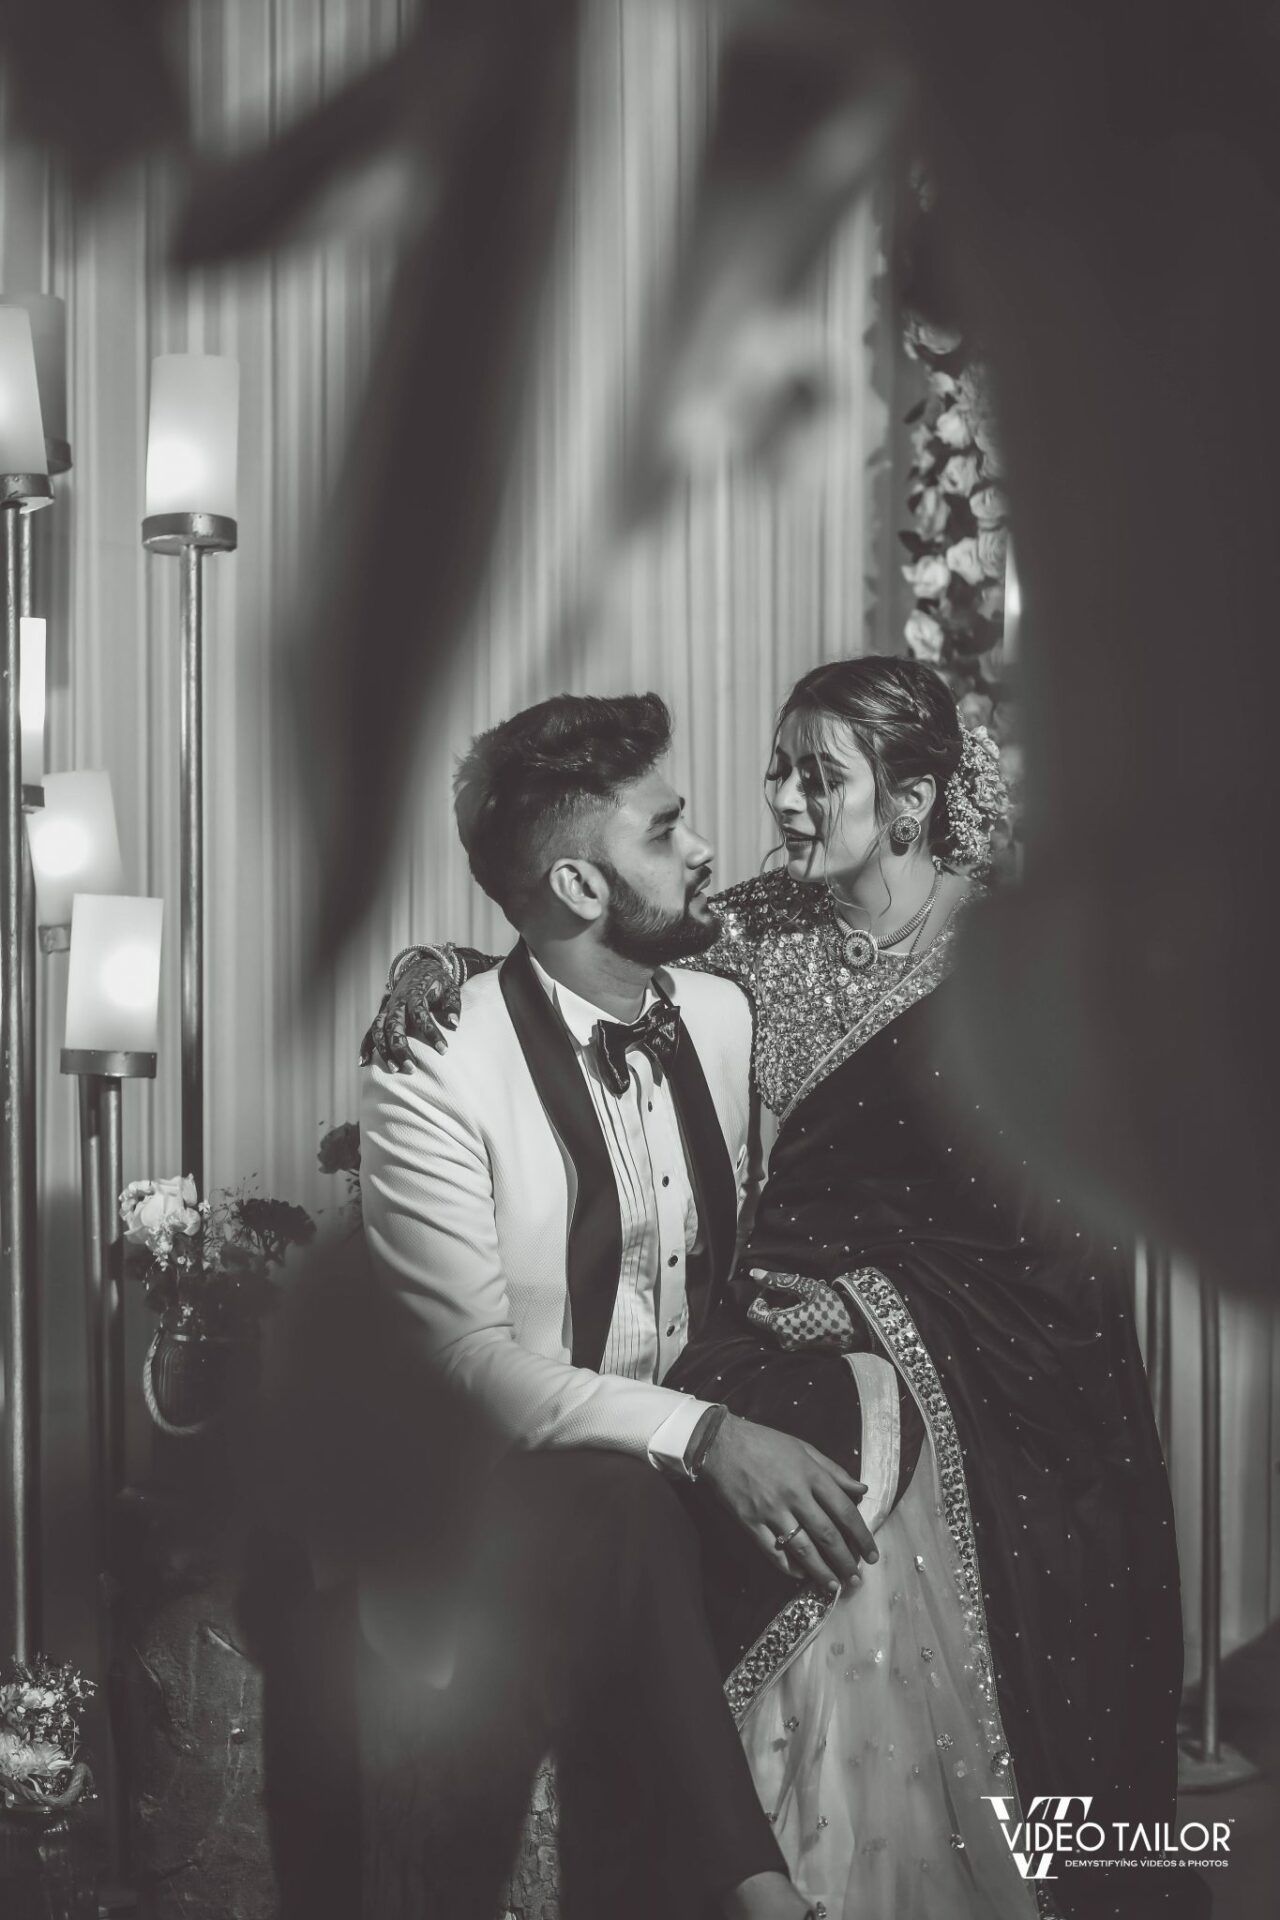 Couple Photoshoot Poses: कपल को कराना है प्री-वेडिंग फोटोशूट, तो बेस्ट  रहेंगी ये रोमांटिक पोज | Wedding Couple Poses | Couple Poses For Selfie -  Prakash News